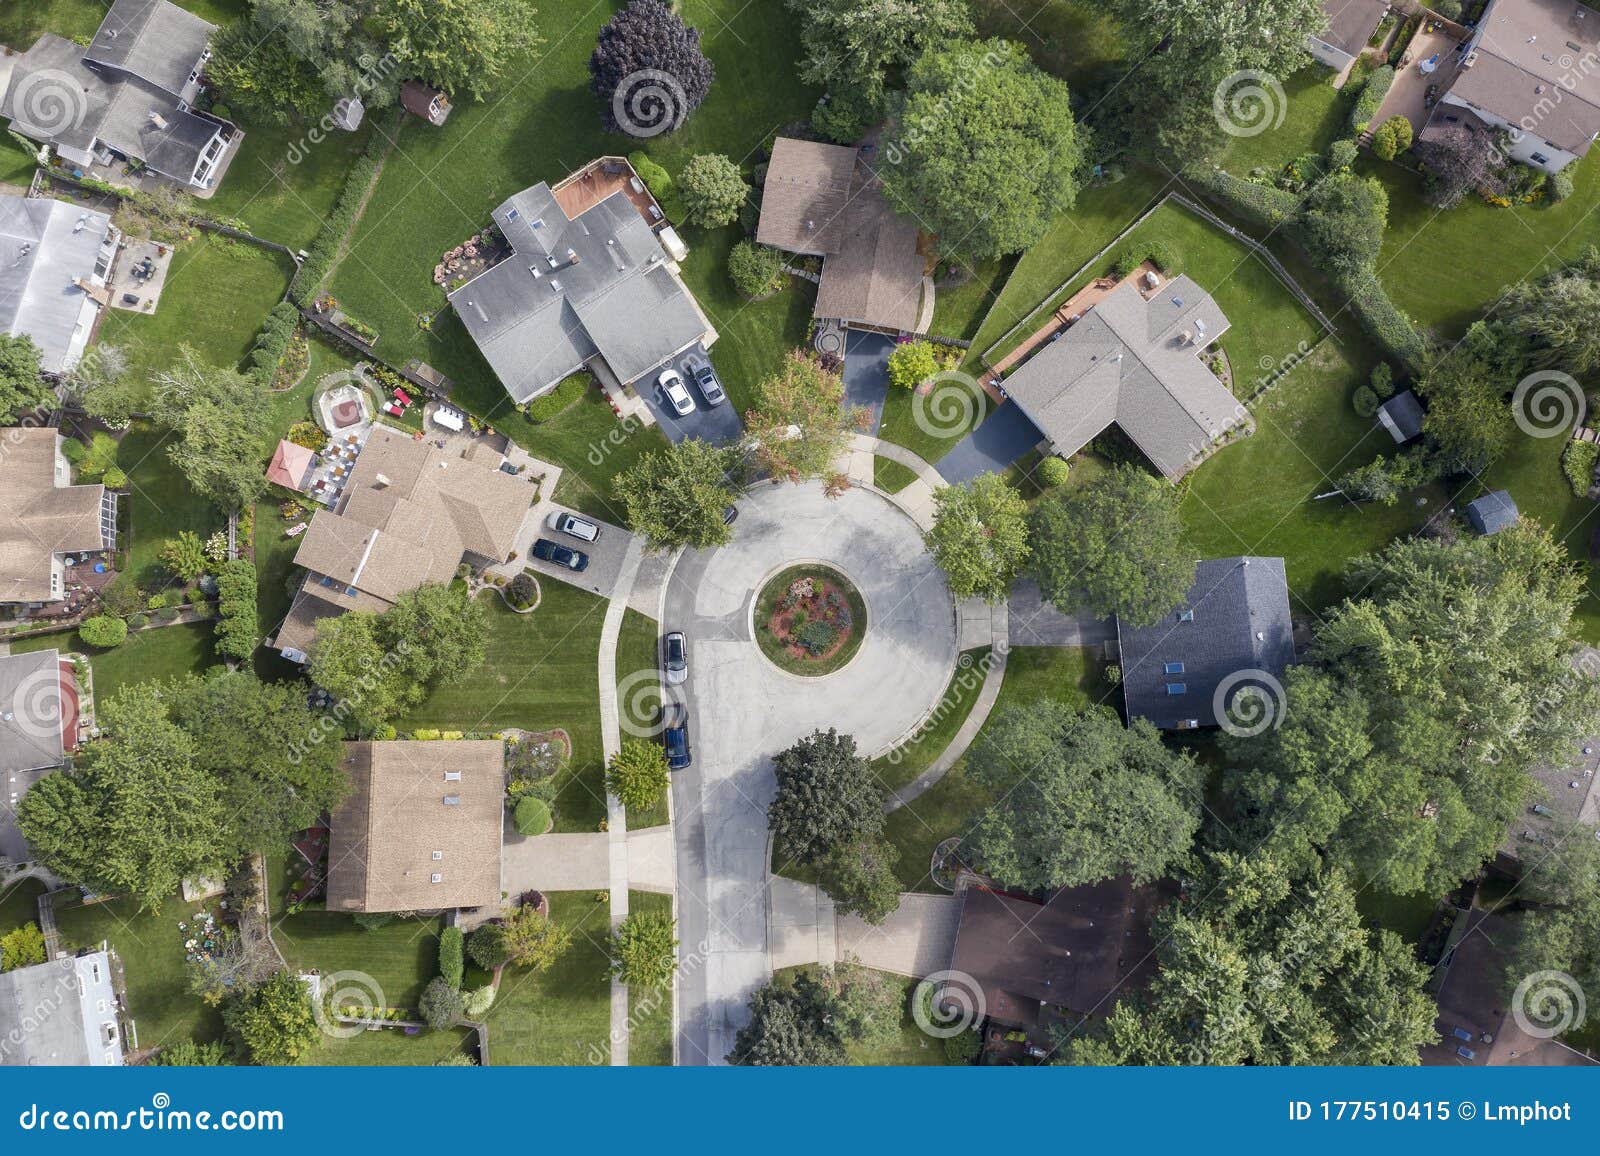 suburban neighborhood cul-de-sac aerial